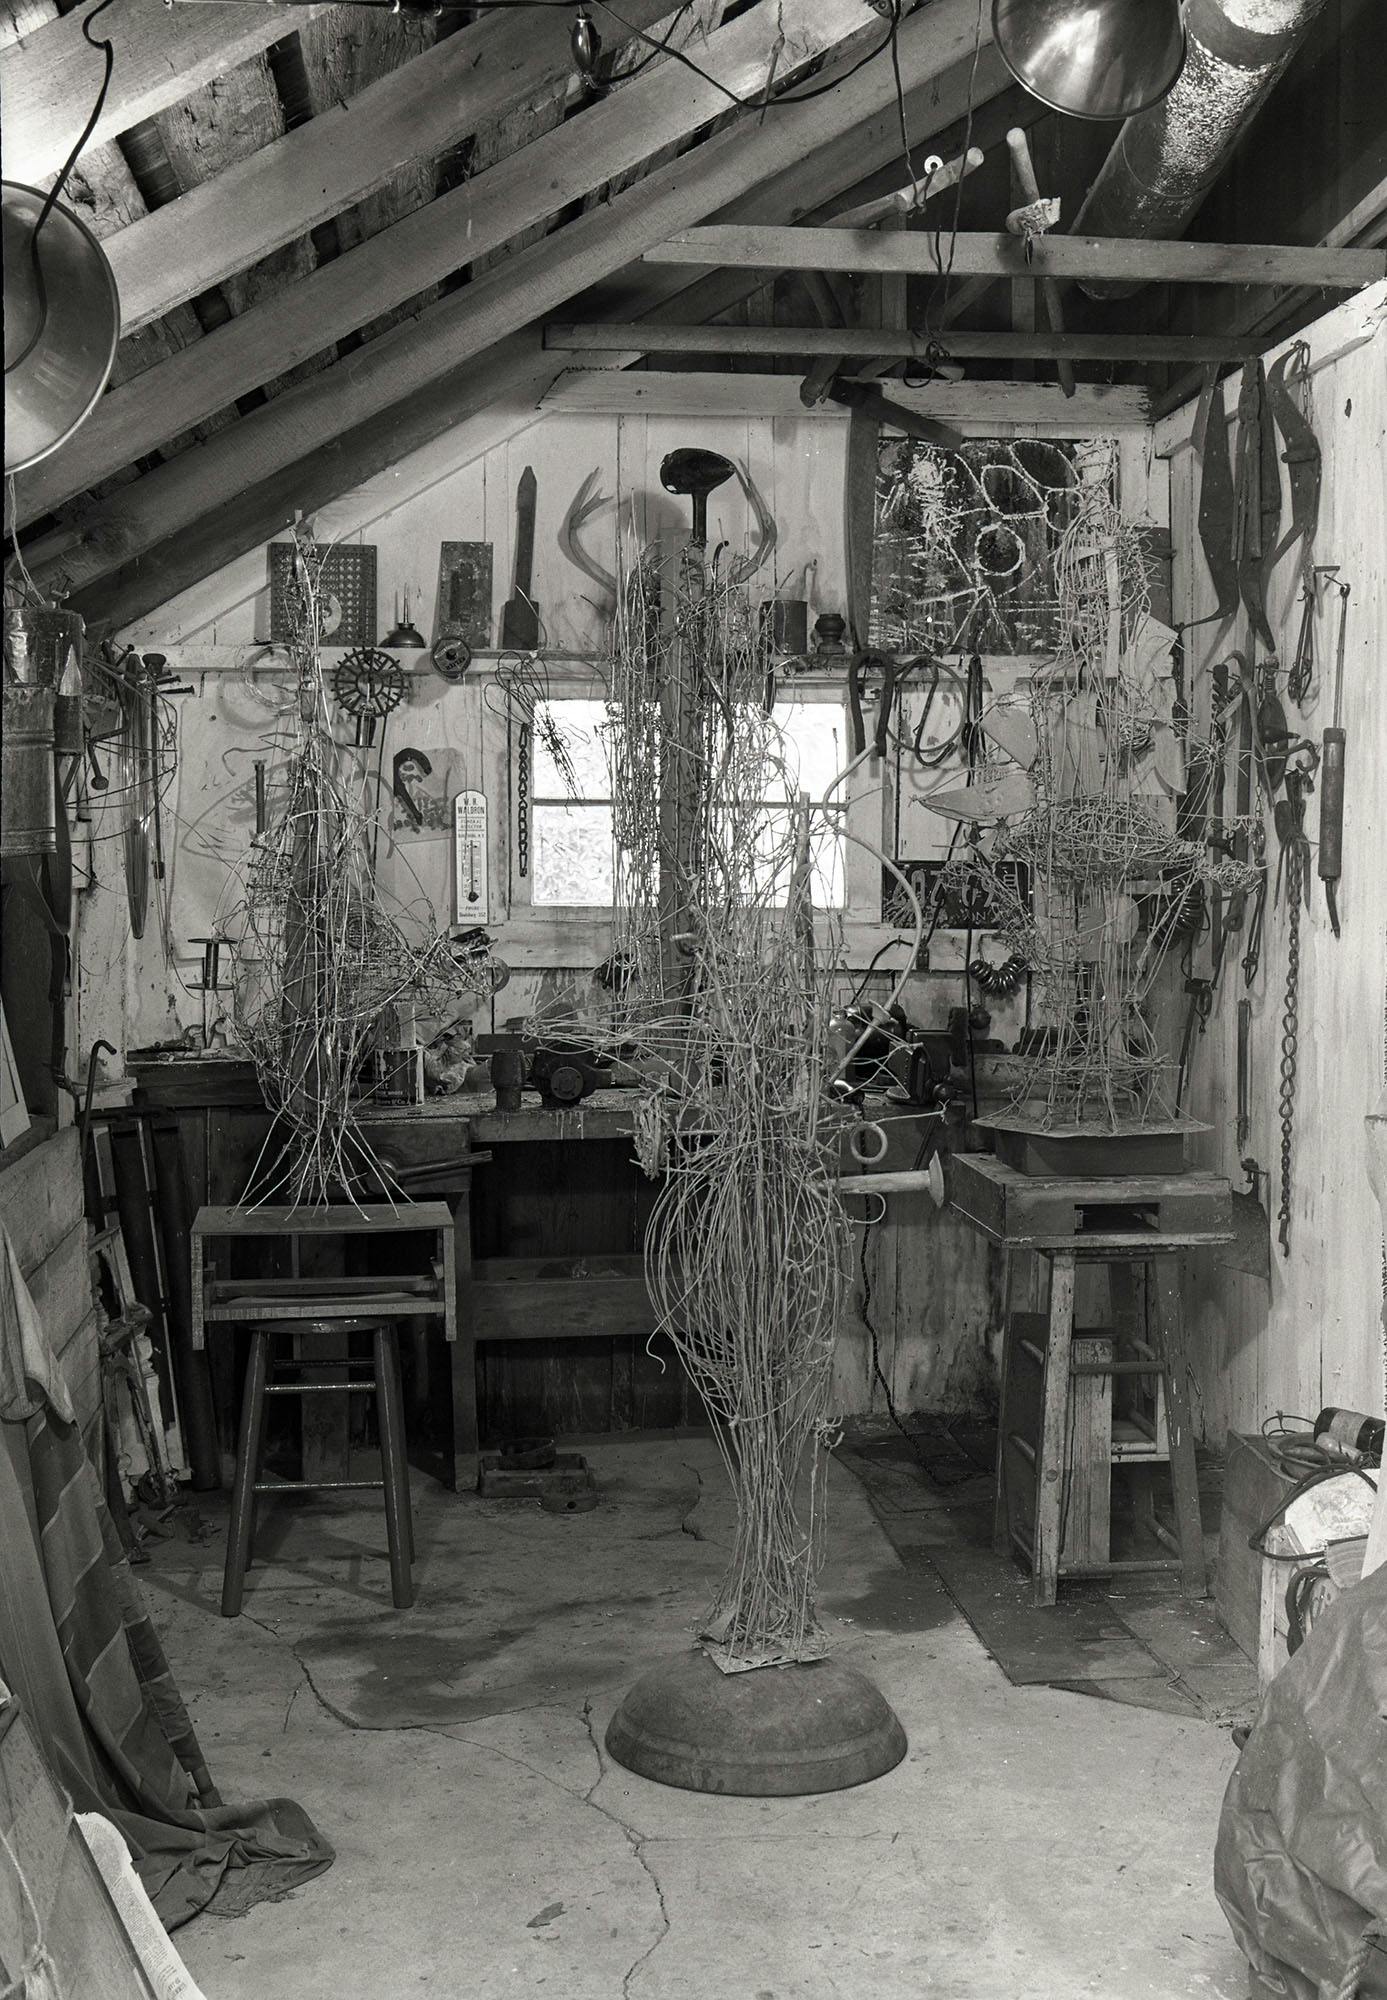 Pousette-Dart's wire sculpture studio, Sloatsburg, NY, c. 1951. – The Richard Pousette-Dart Foundation